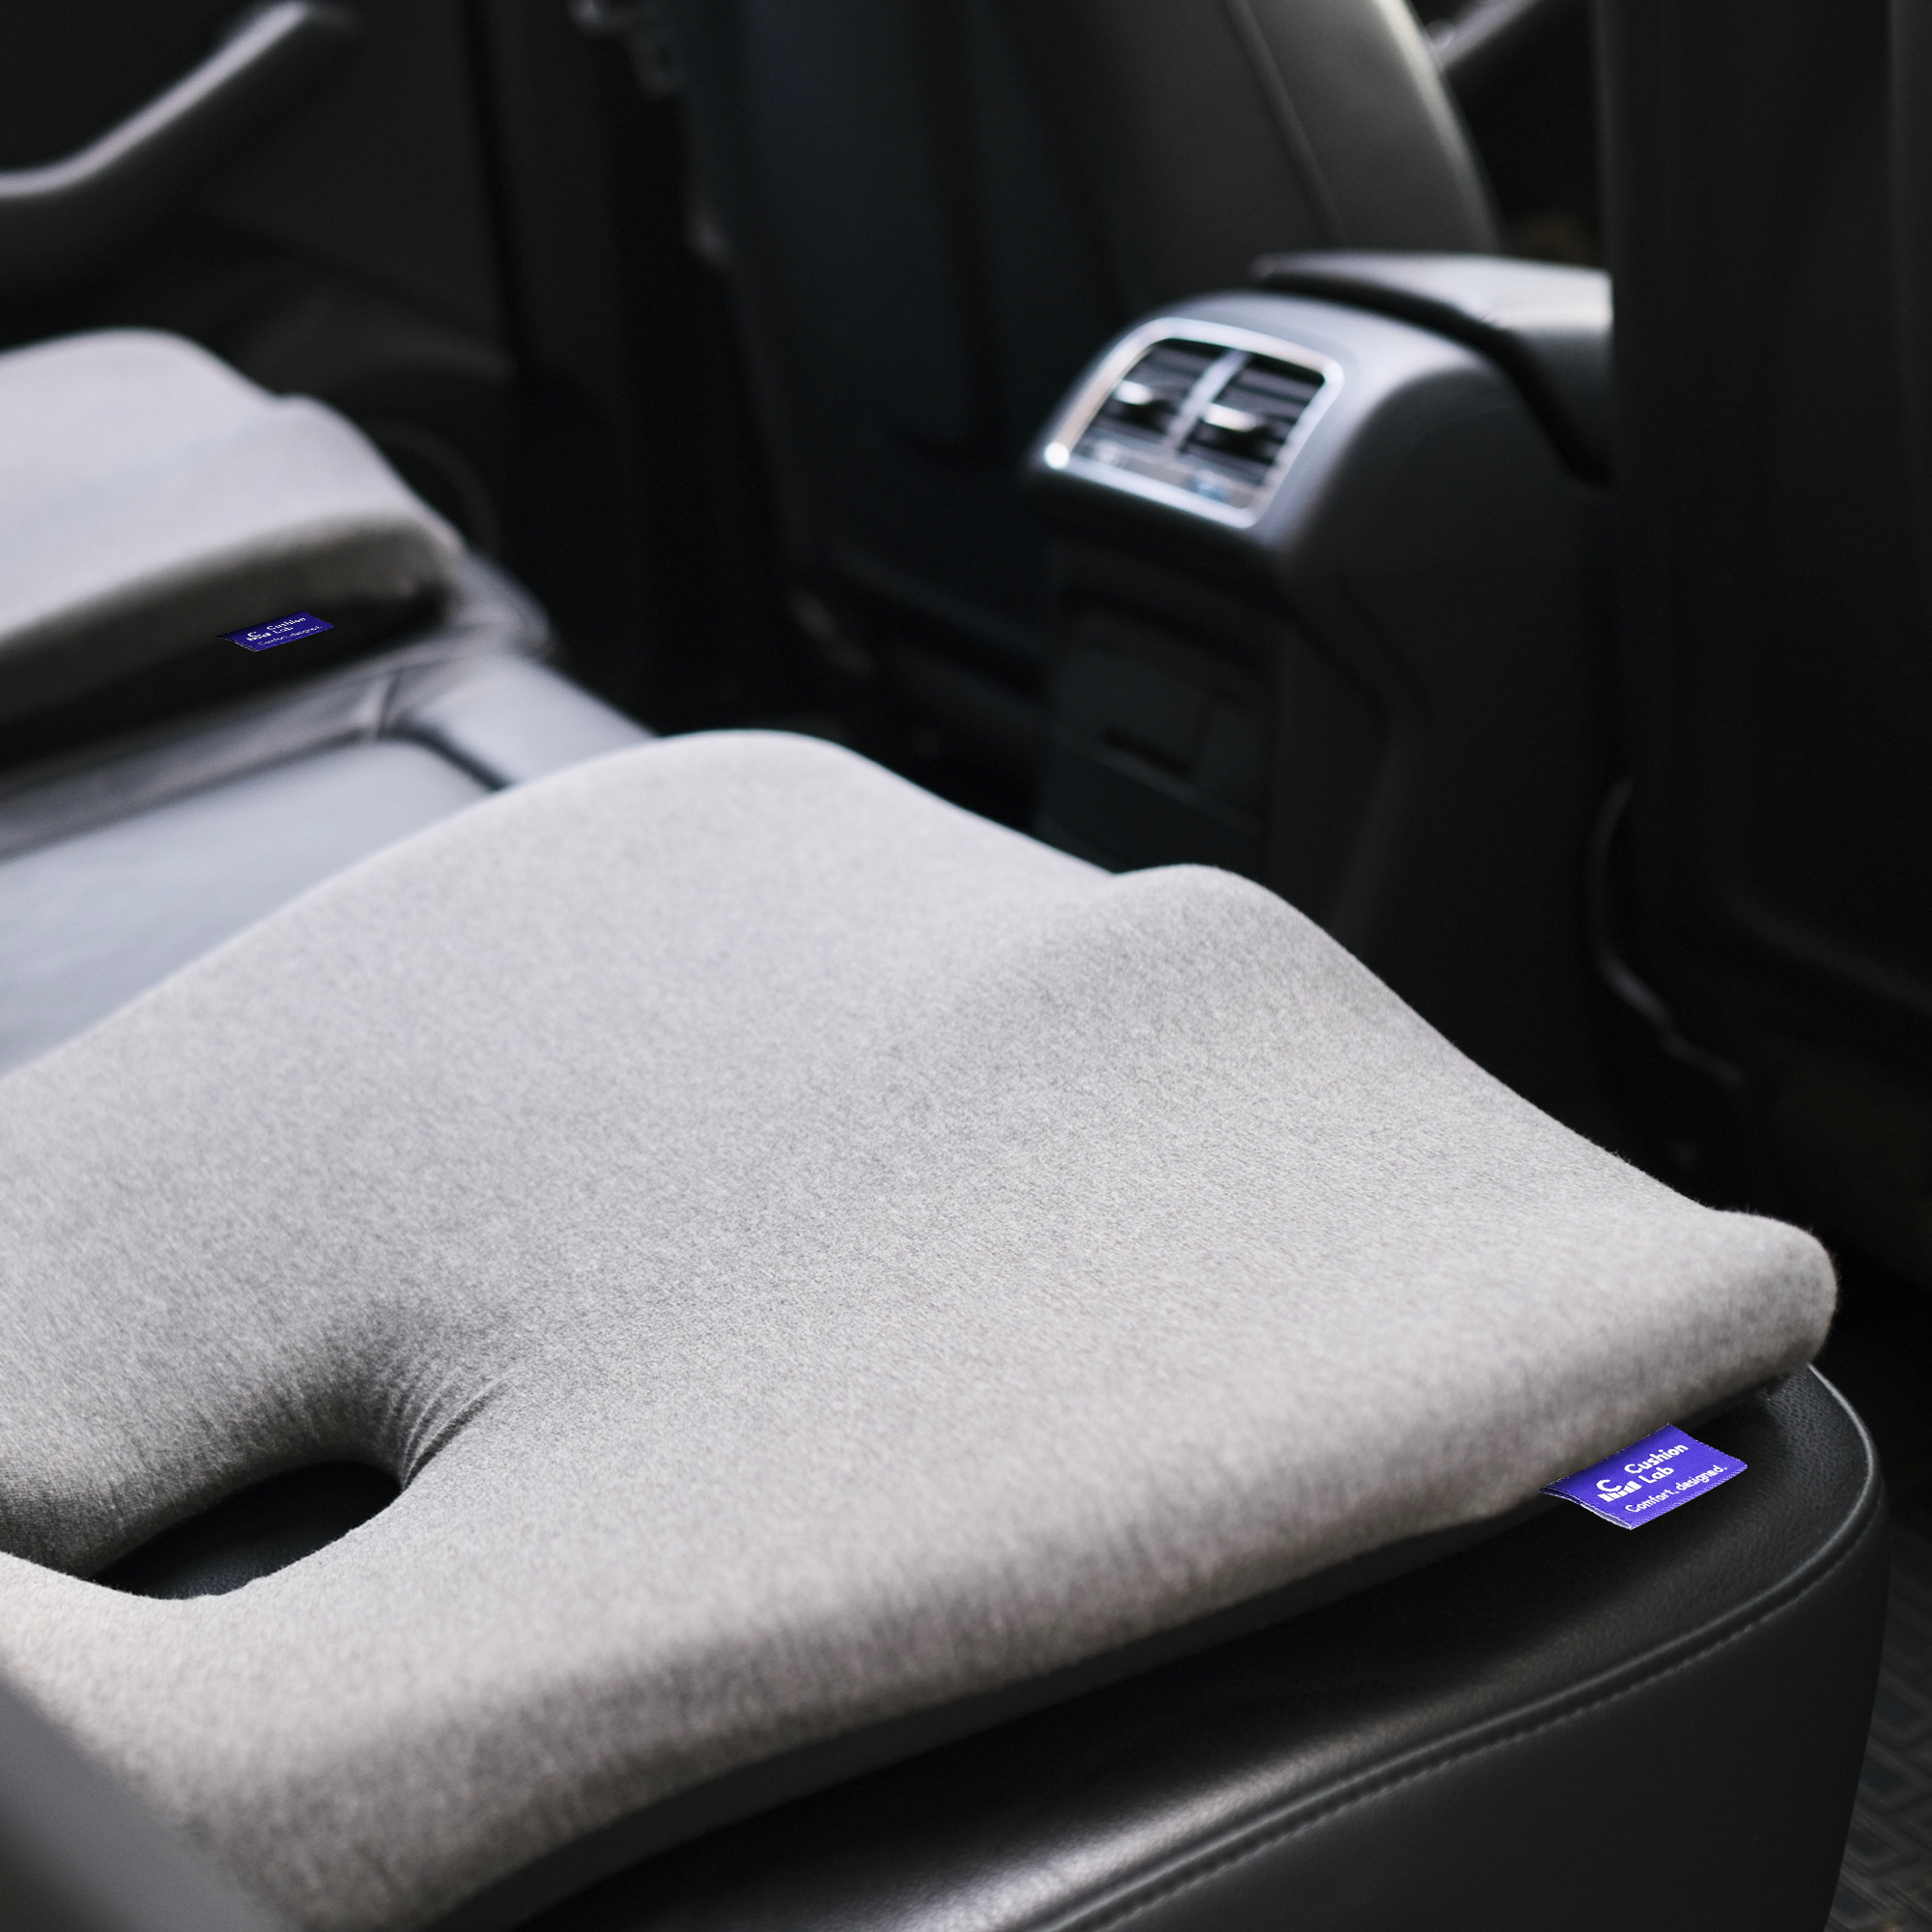 Car Boost Cushion - Black Poly  Car seats, Car seat cushion, Best car seats